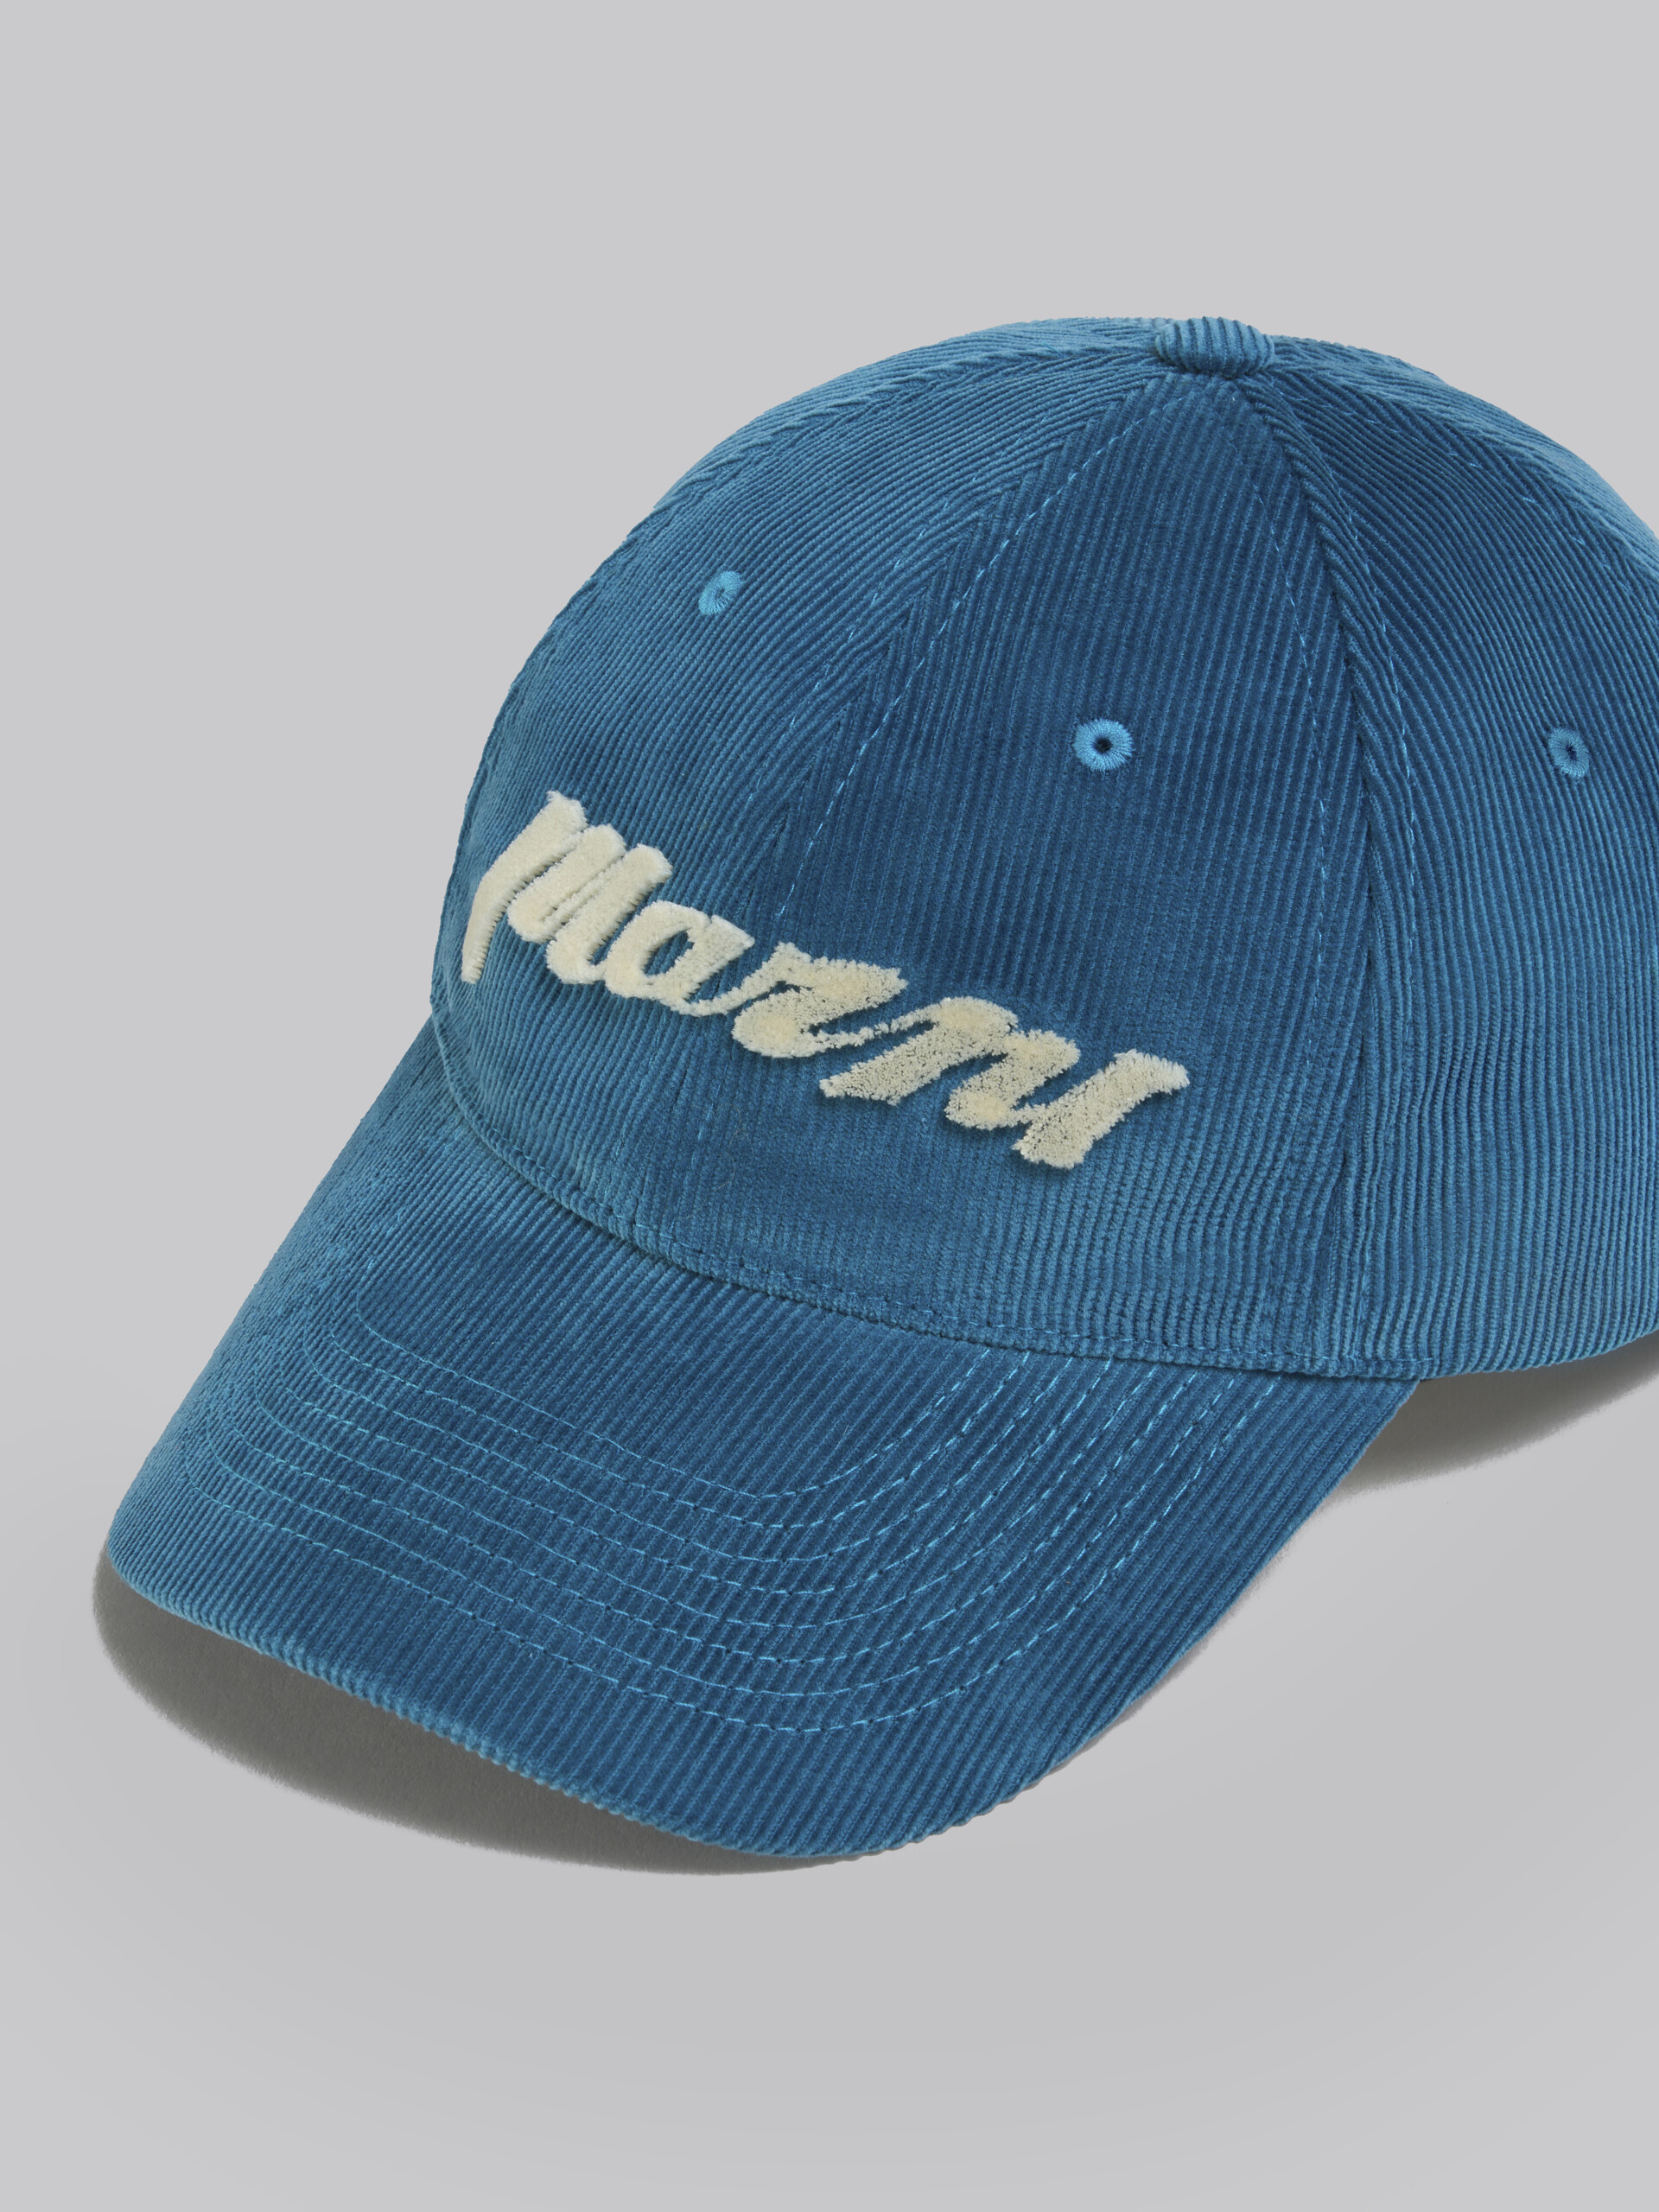 Blue corduroy baseball cap with sponge logo - Hats - Image 4